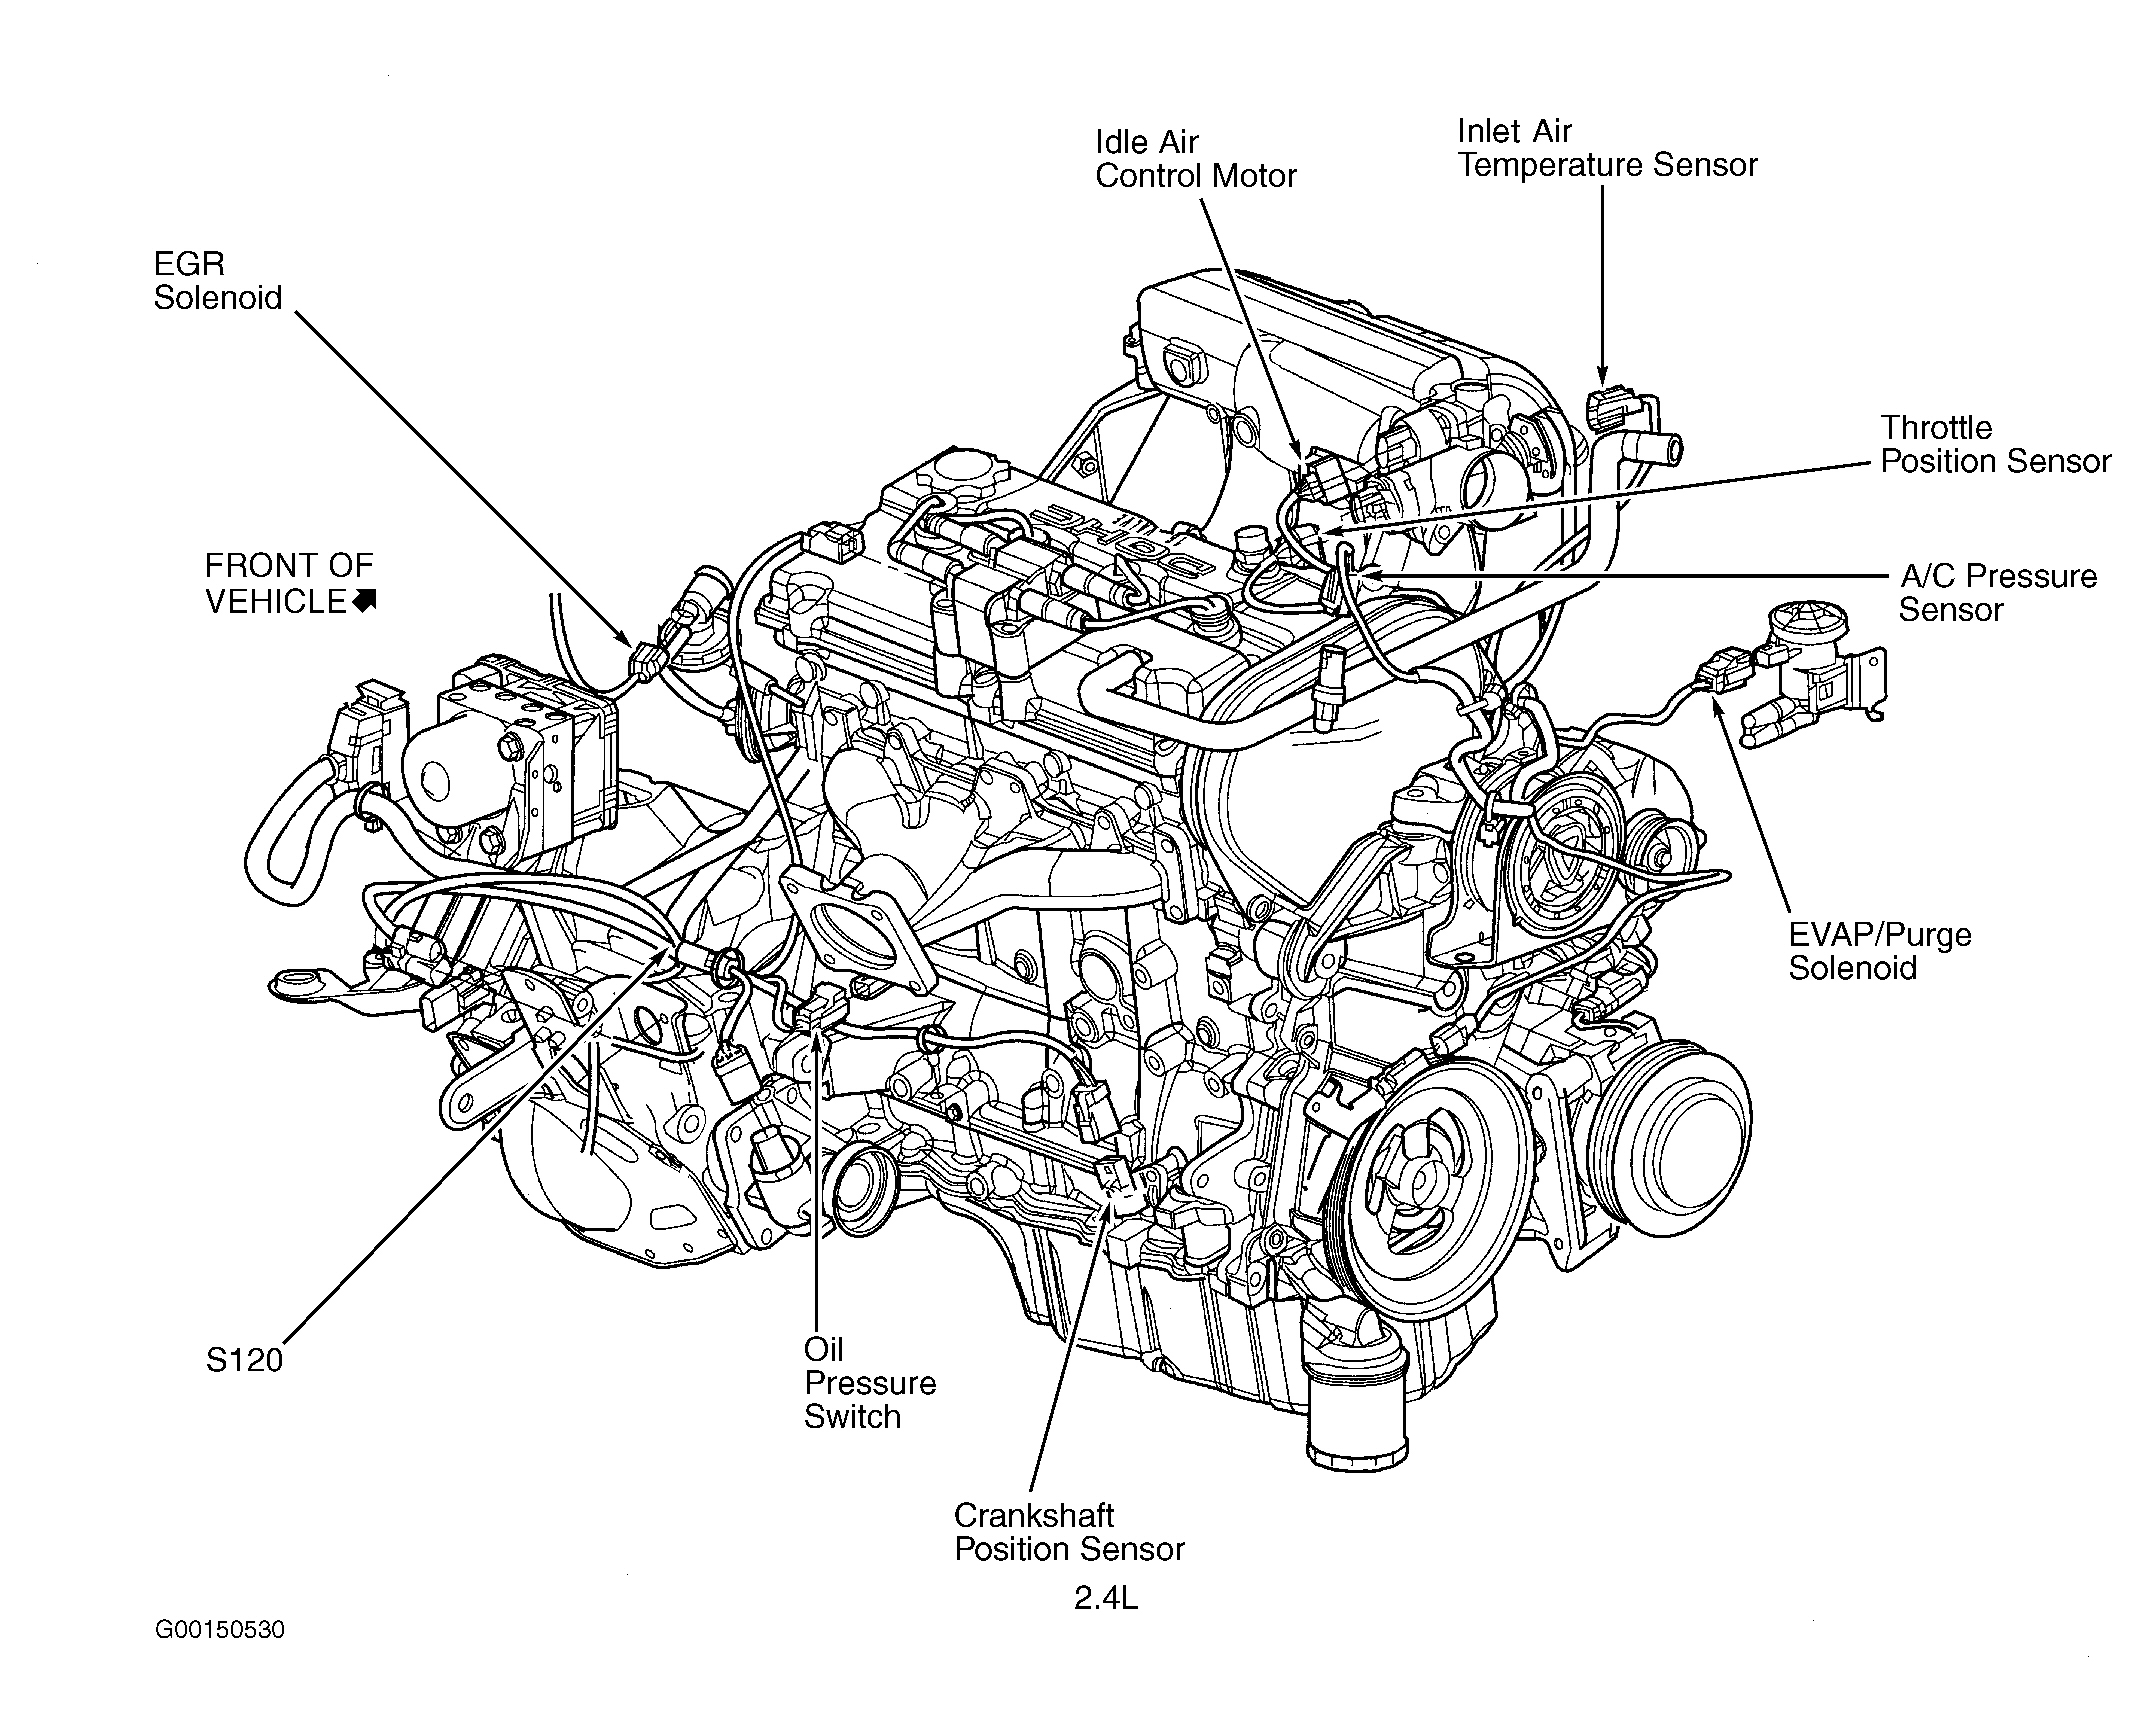 Dodge Grand Caravan ES 2003 - Component Locations -  Right Side Of Engine (2.4L)